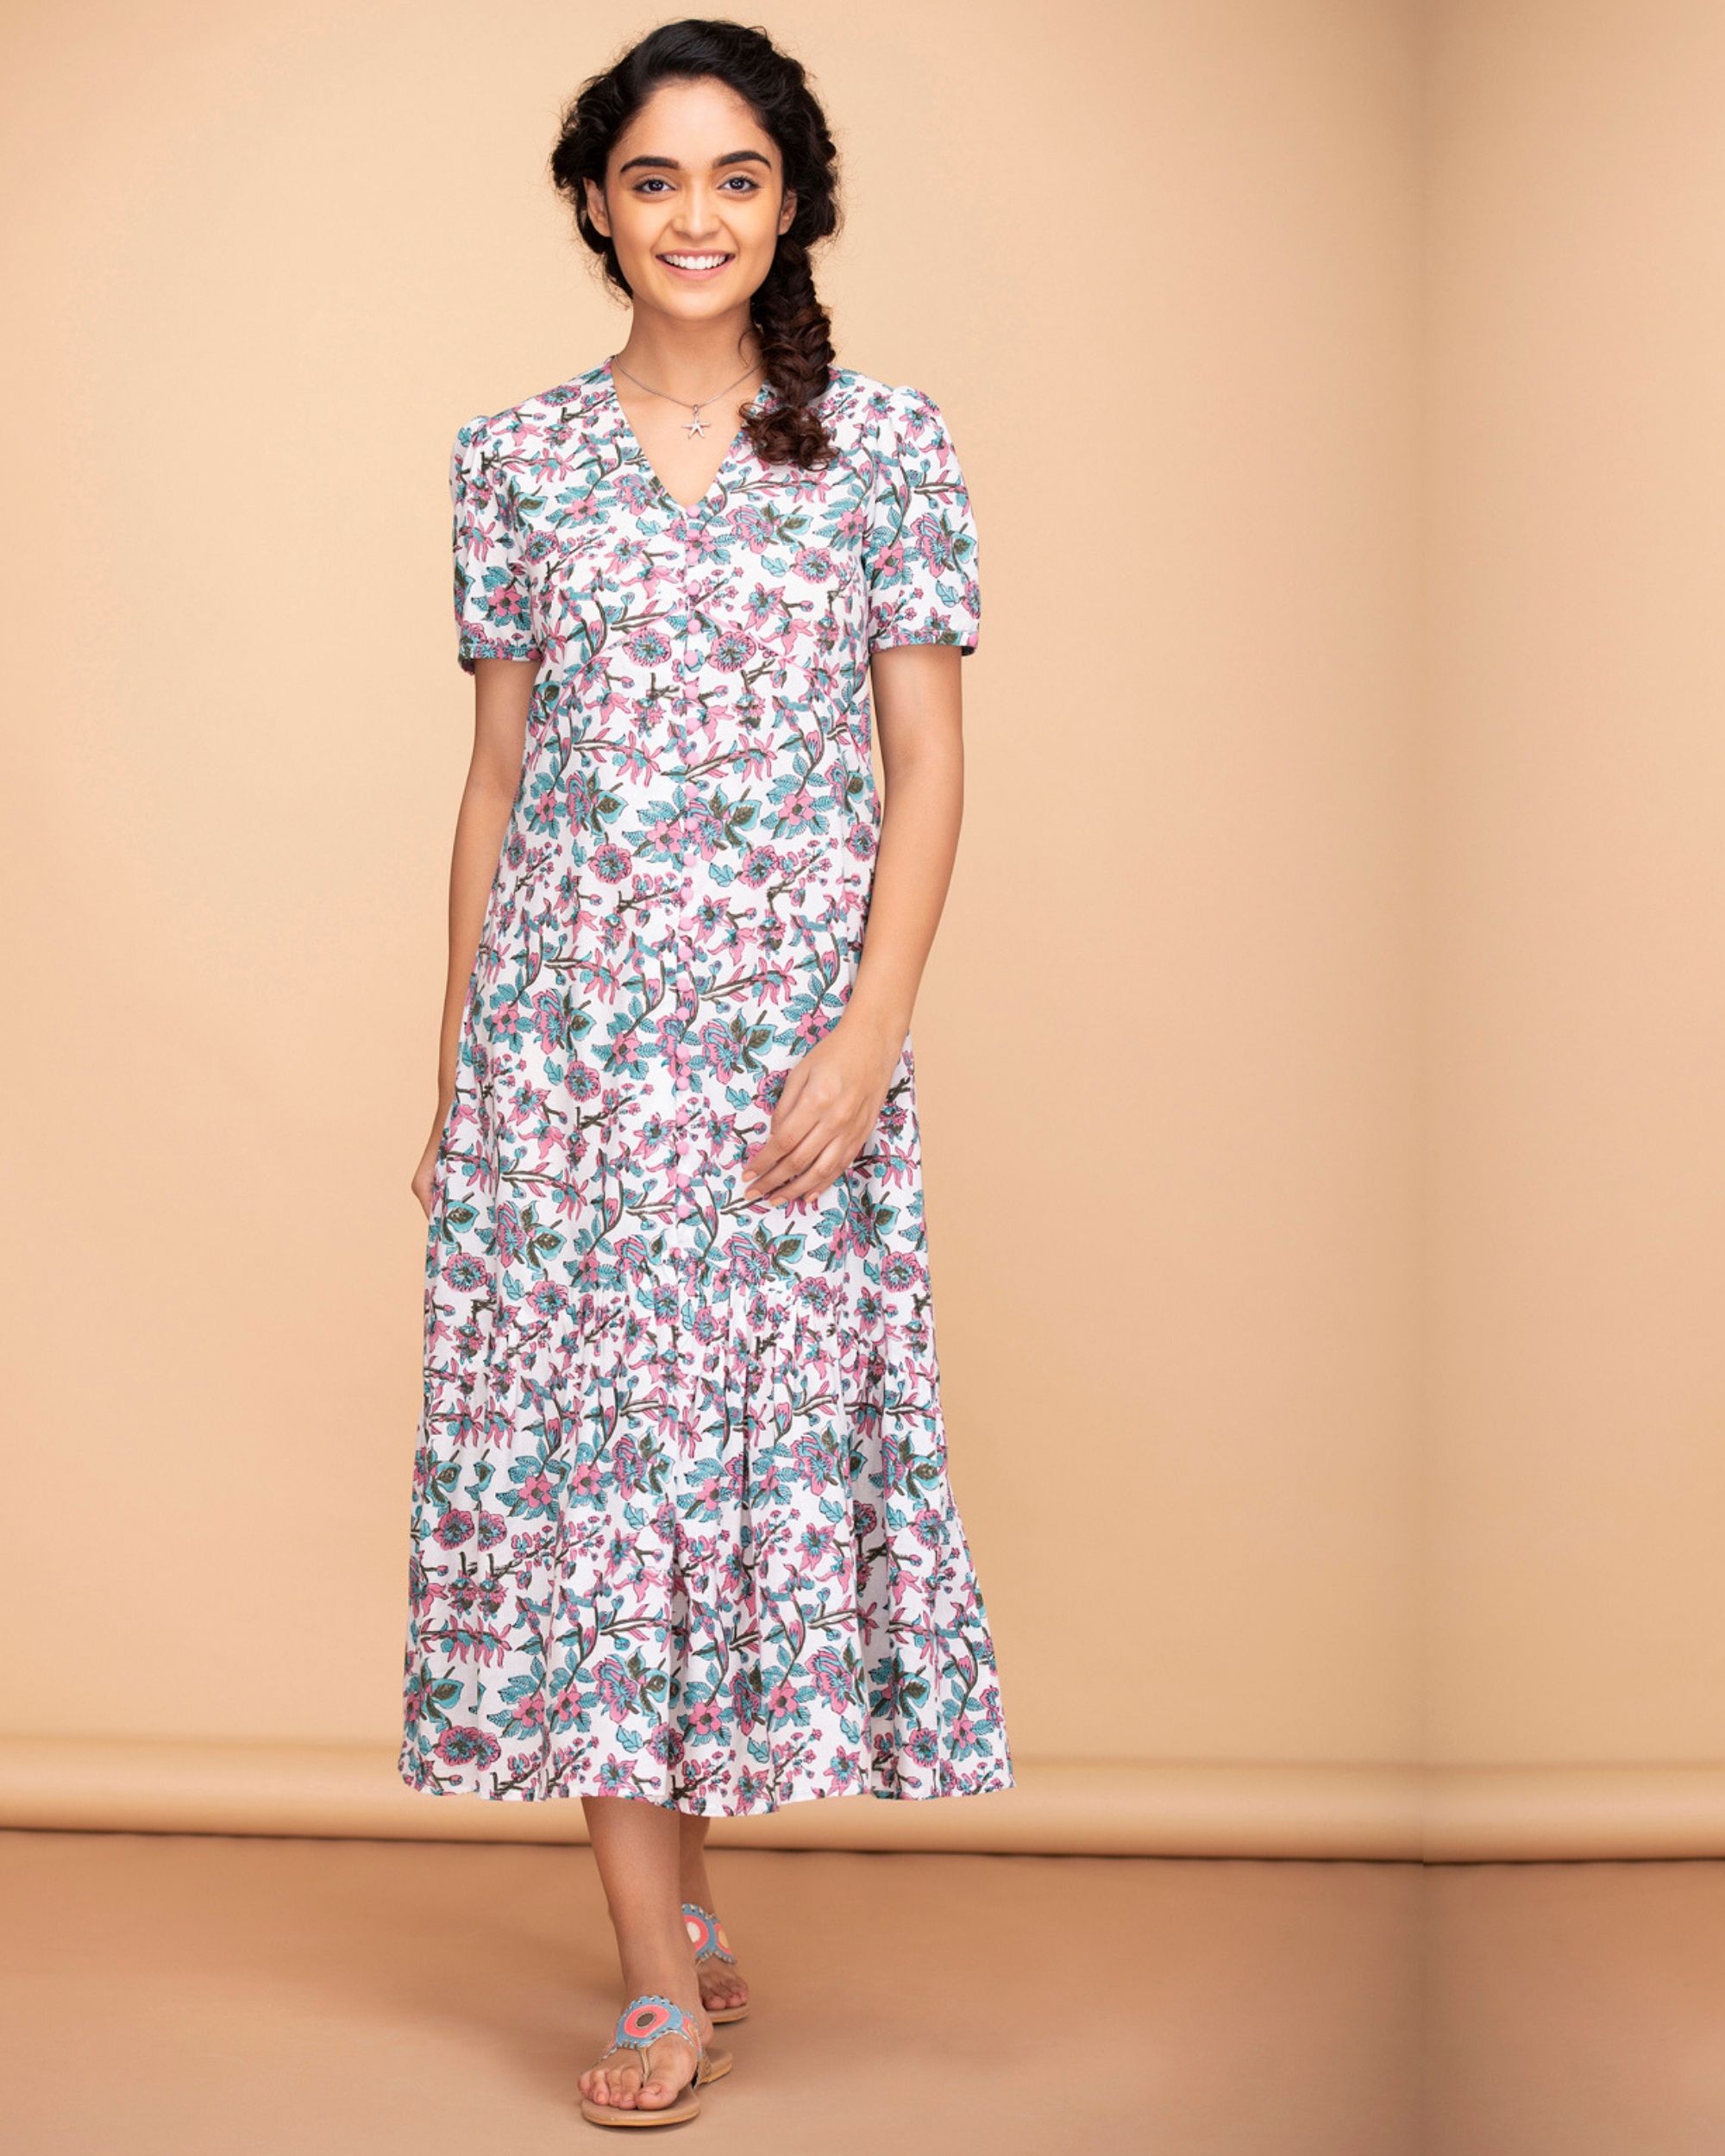 Floral a-line ruffled dress by Twirl Studio | The Secret Label